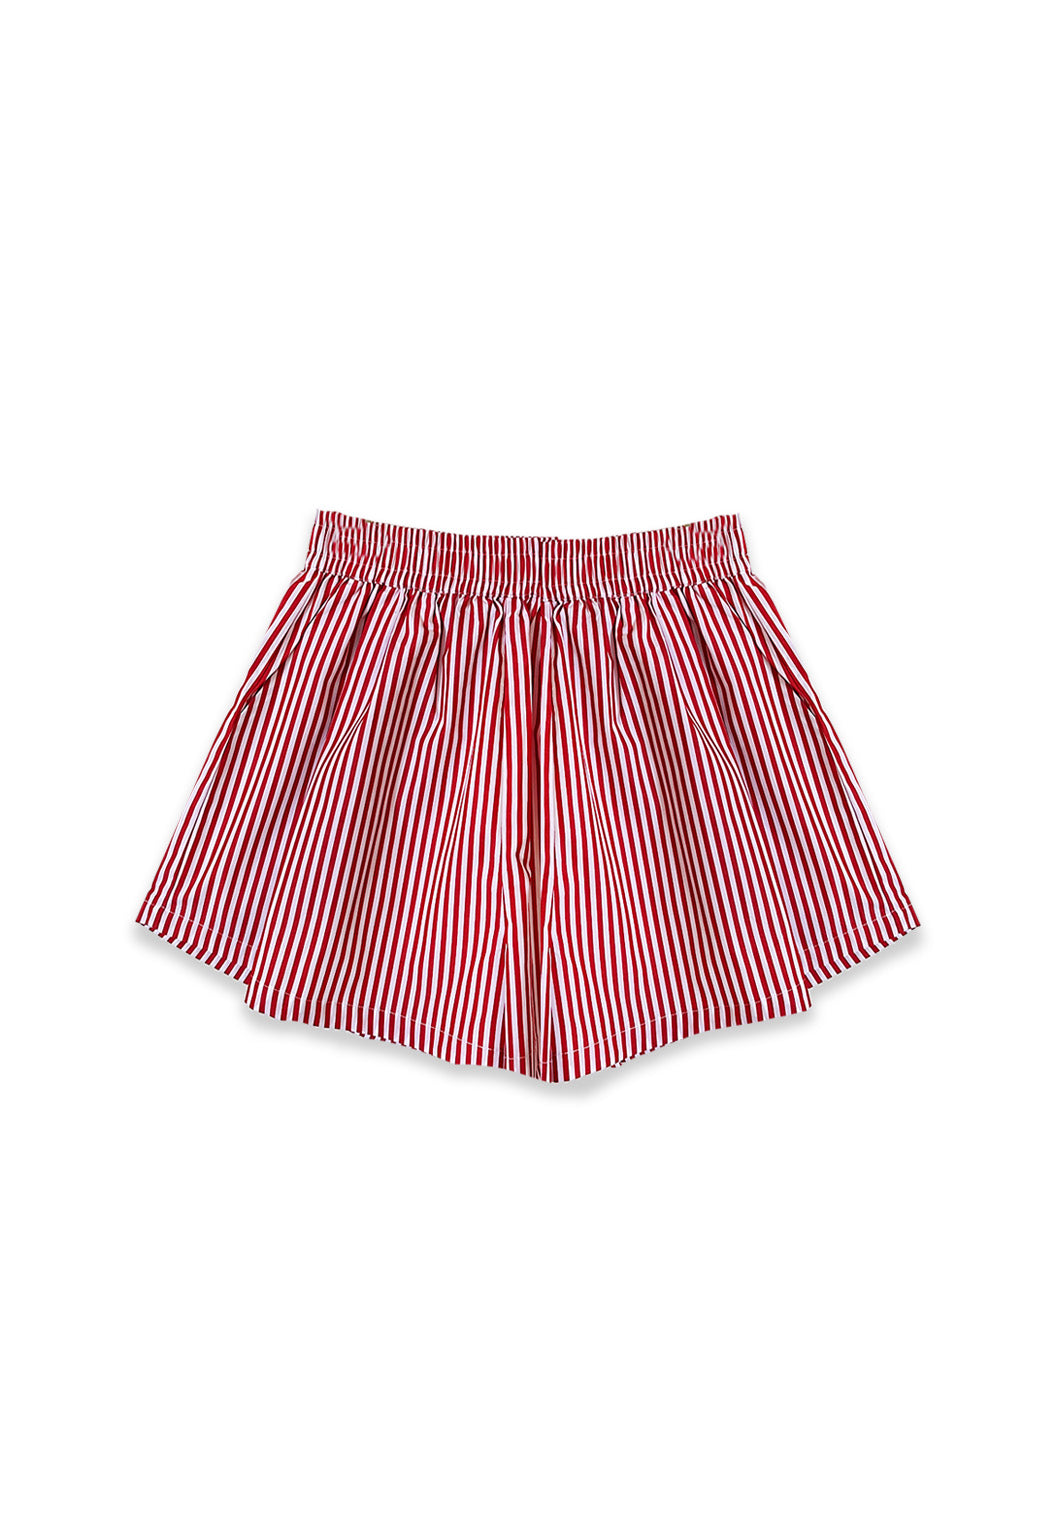 Everyday Shorts - Red Stripe